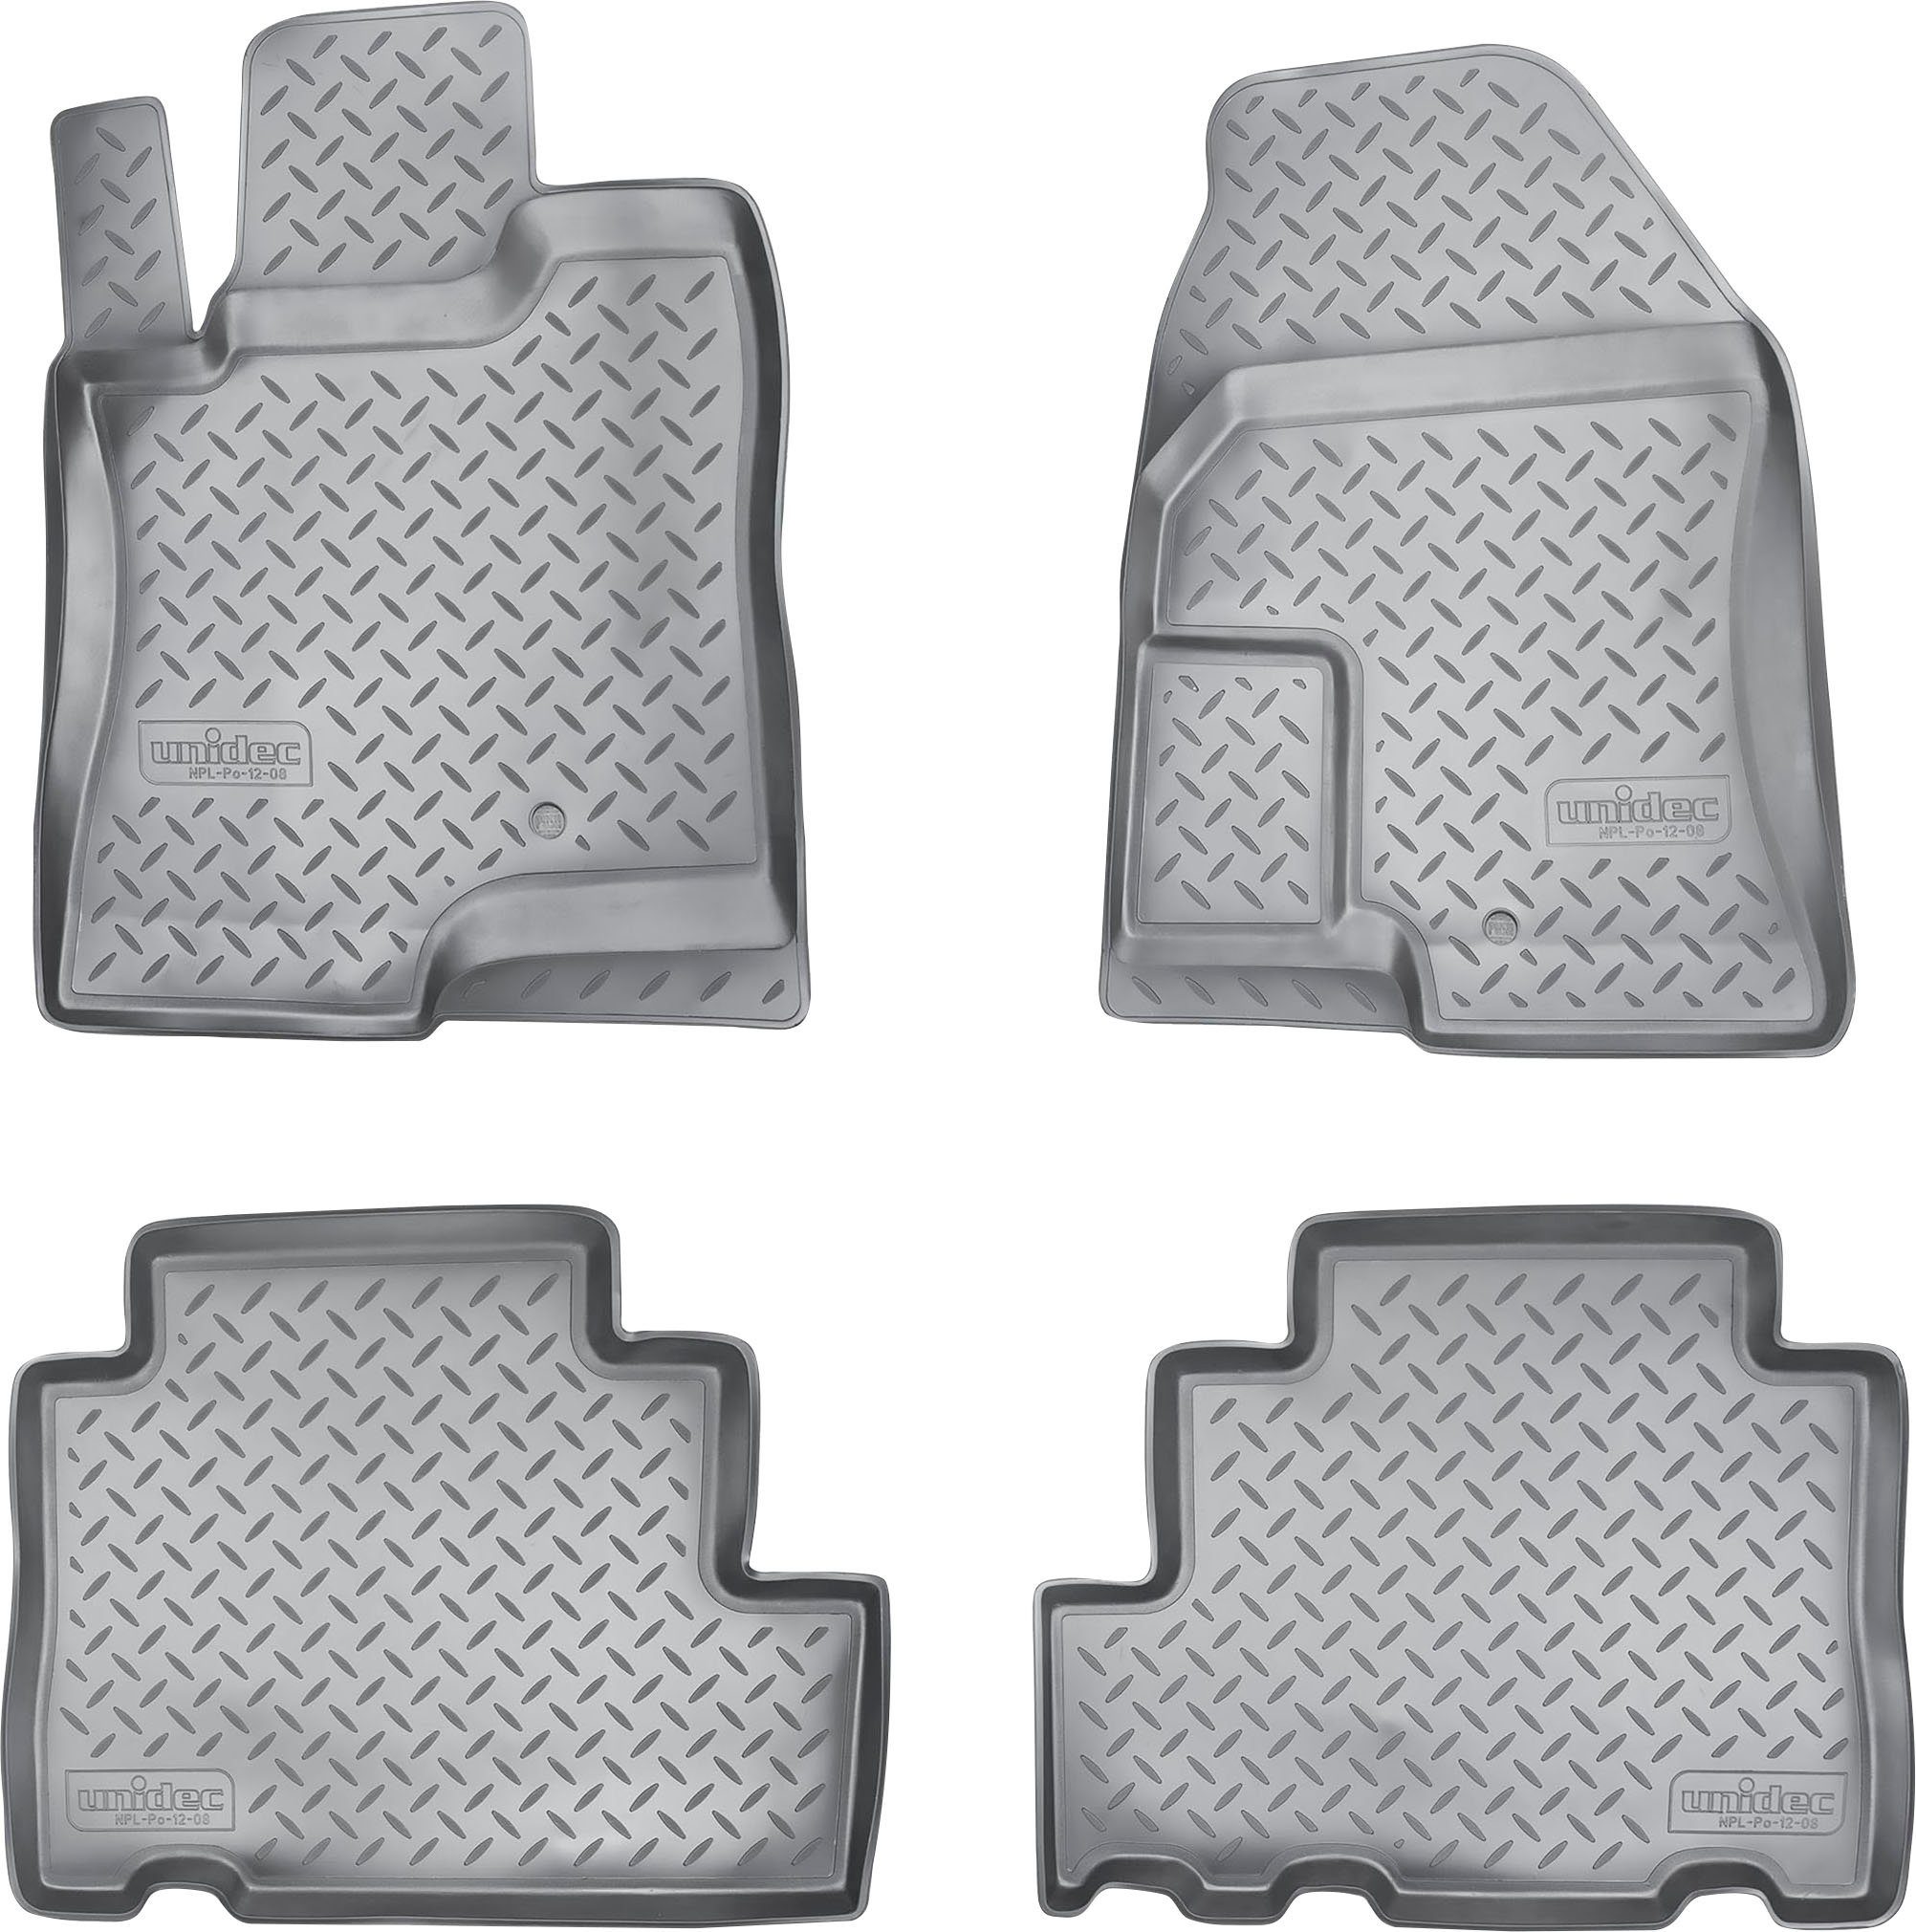 RECAMBO Passform-Fußmatten CustomComforts (4 St), für Chevrolet Captiva, OPEL Antara ab 2006, perfekte Passform